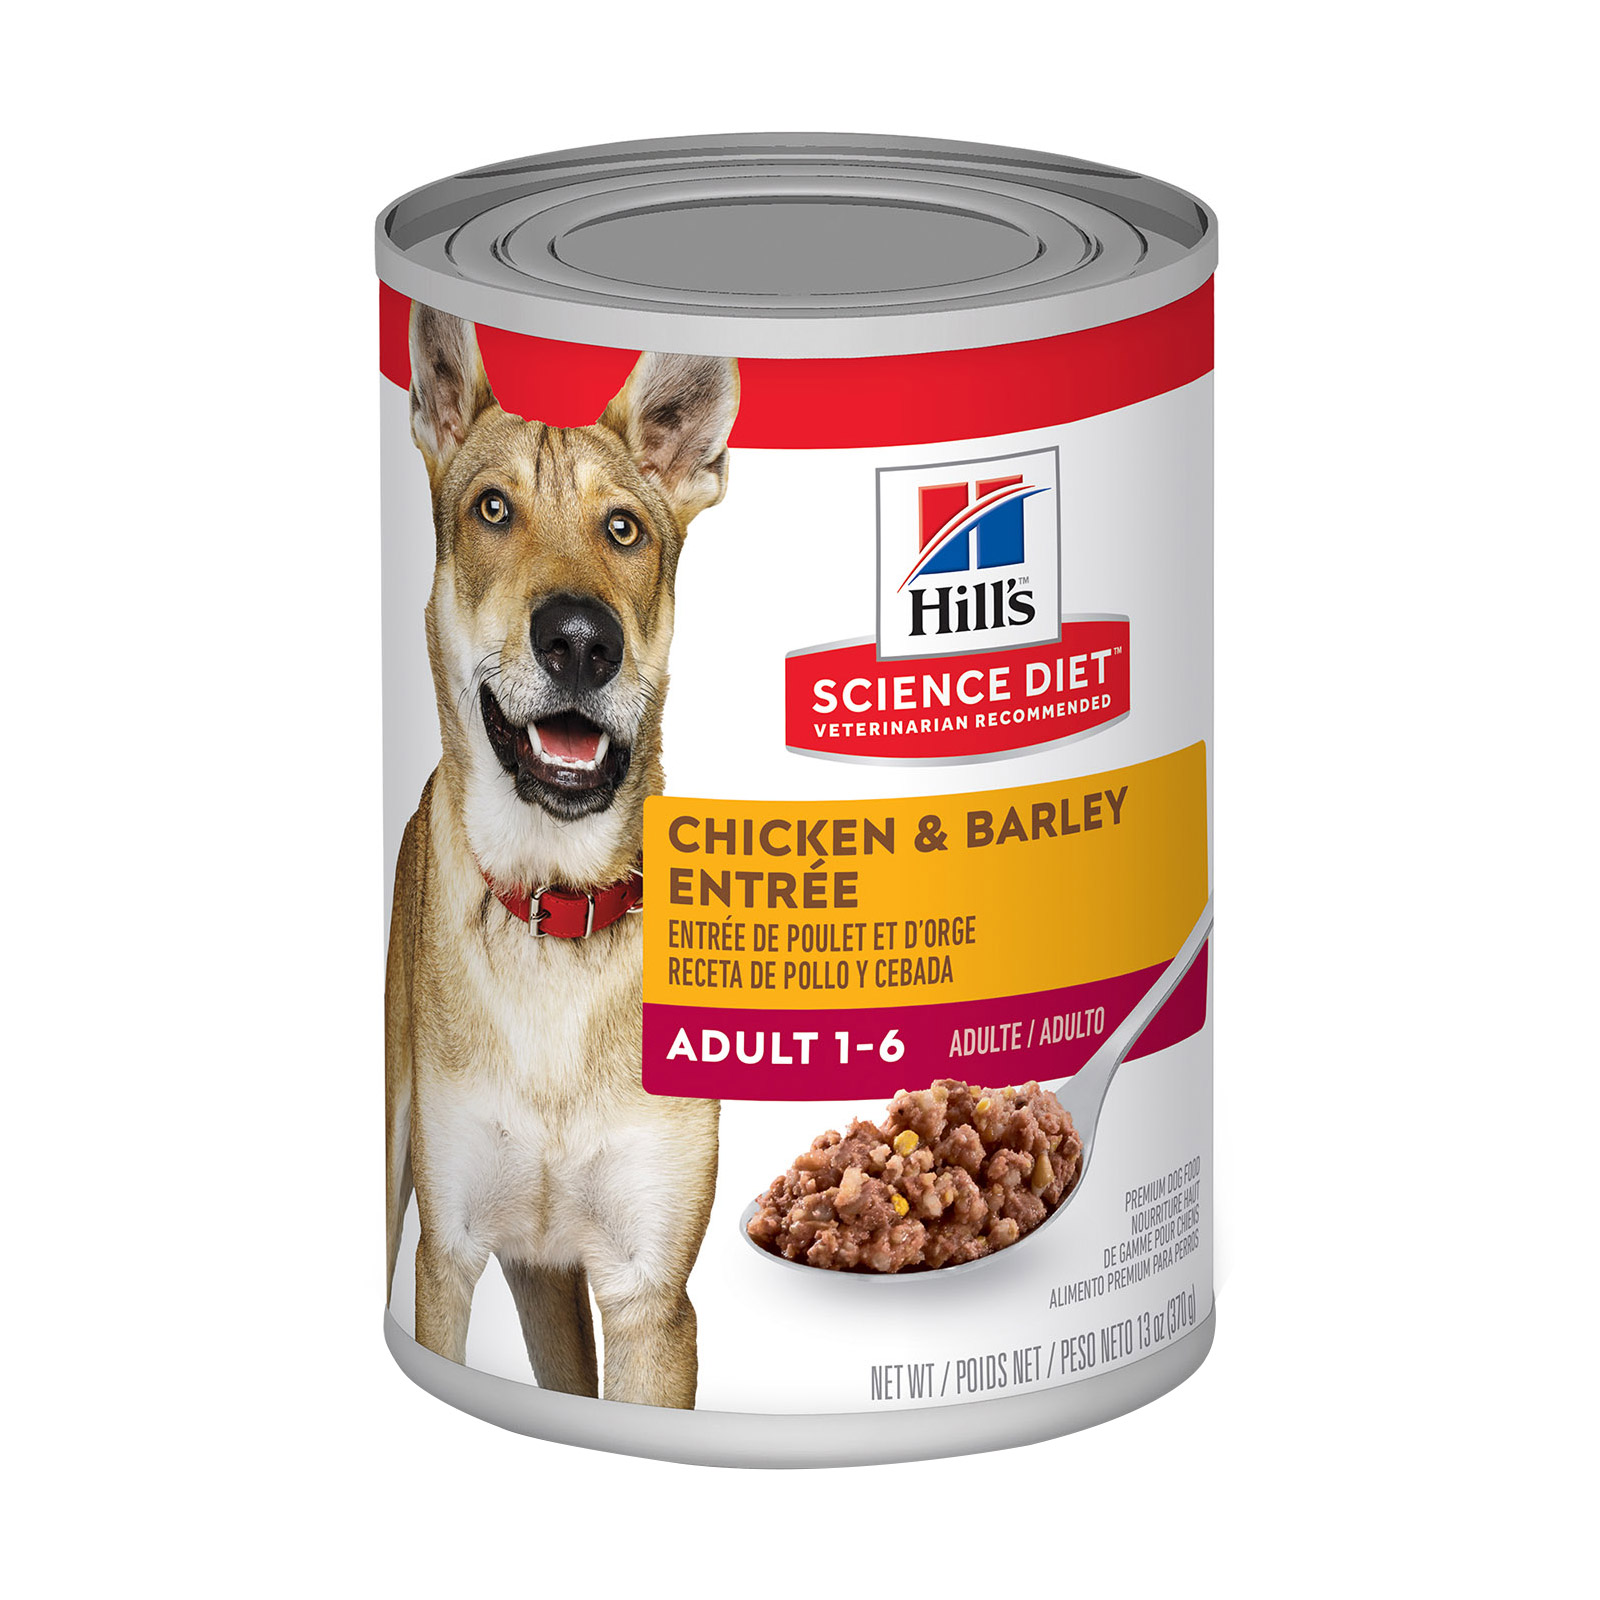 Hill's Science Diet Adult Chicken & Barley Entrée Canned Dog Food for Food